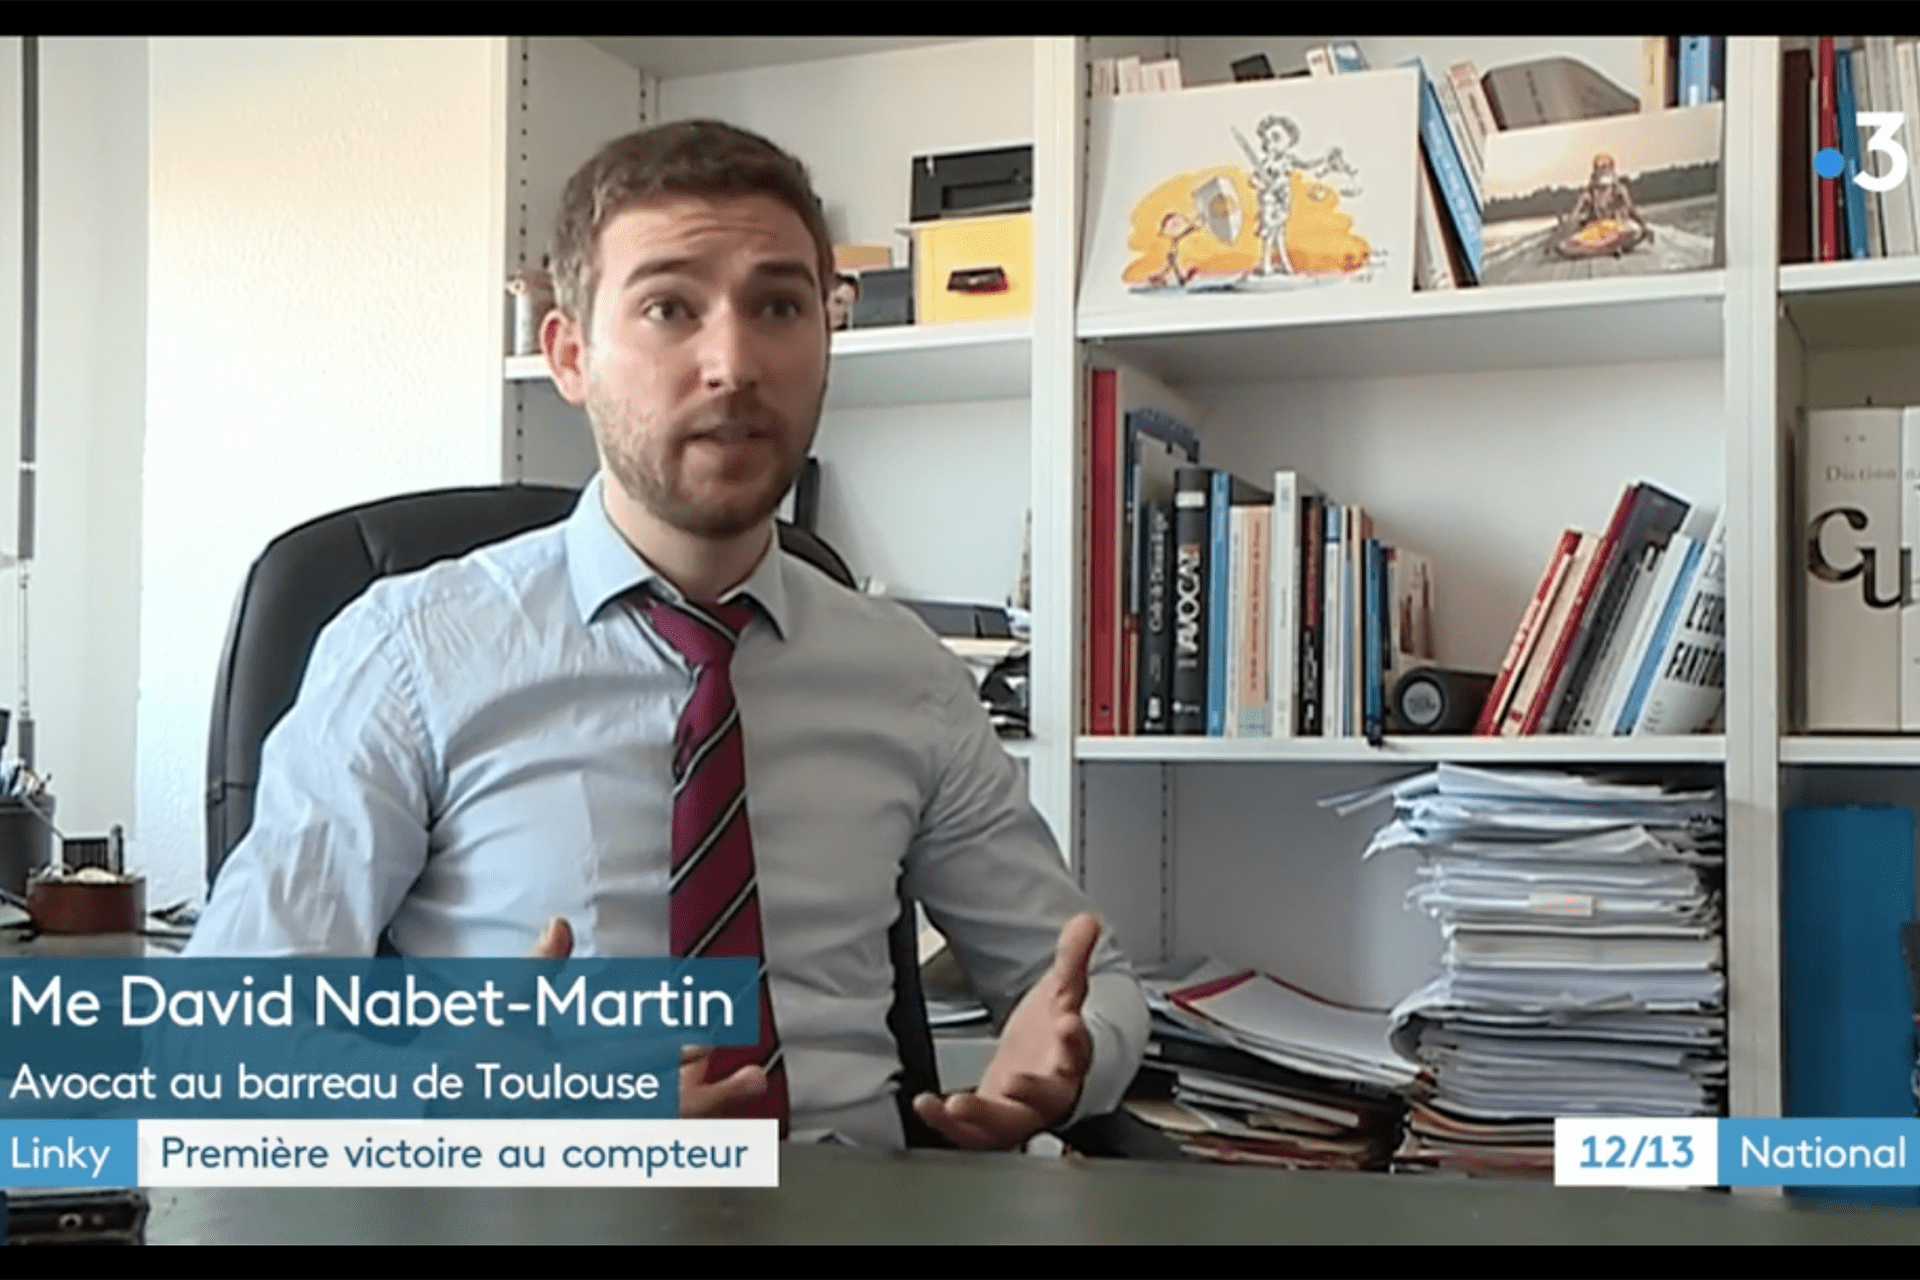 david nabet martin avocat barreau toulouse interview france 3 national